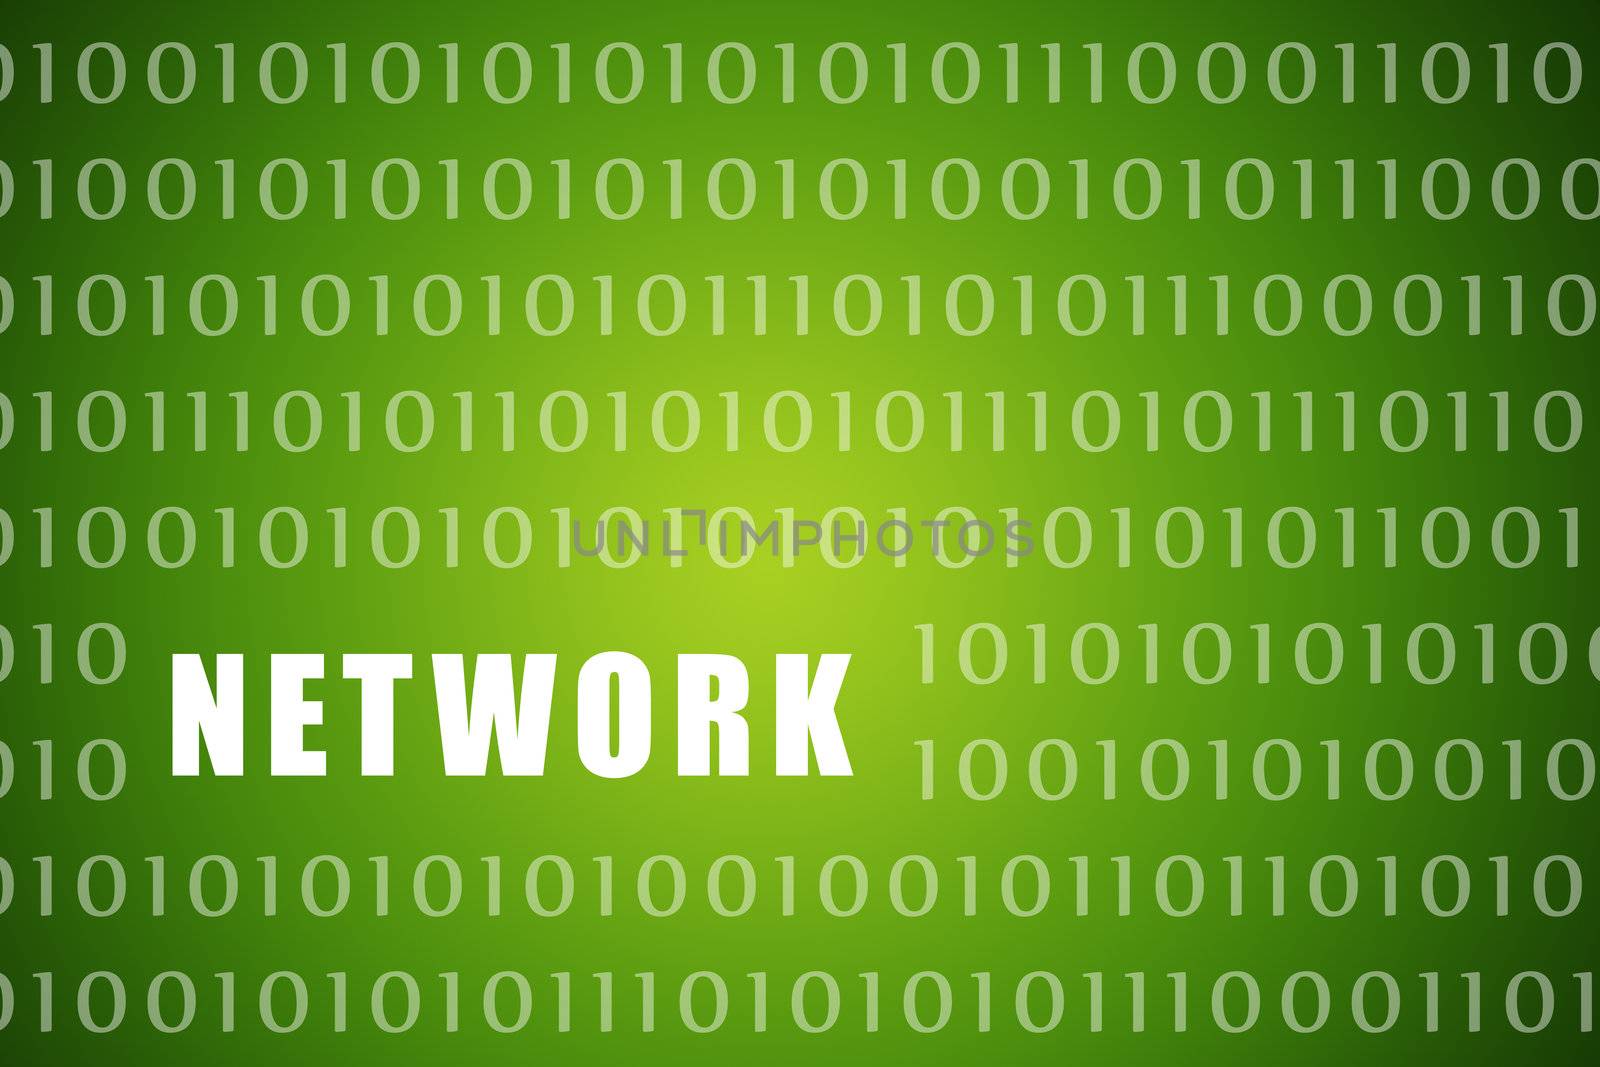 Network by kentoh